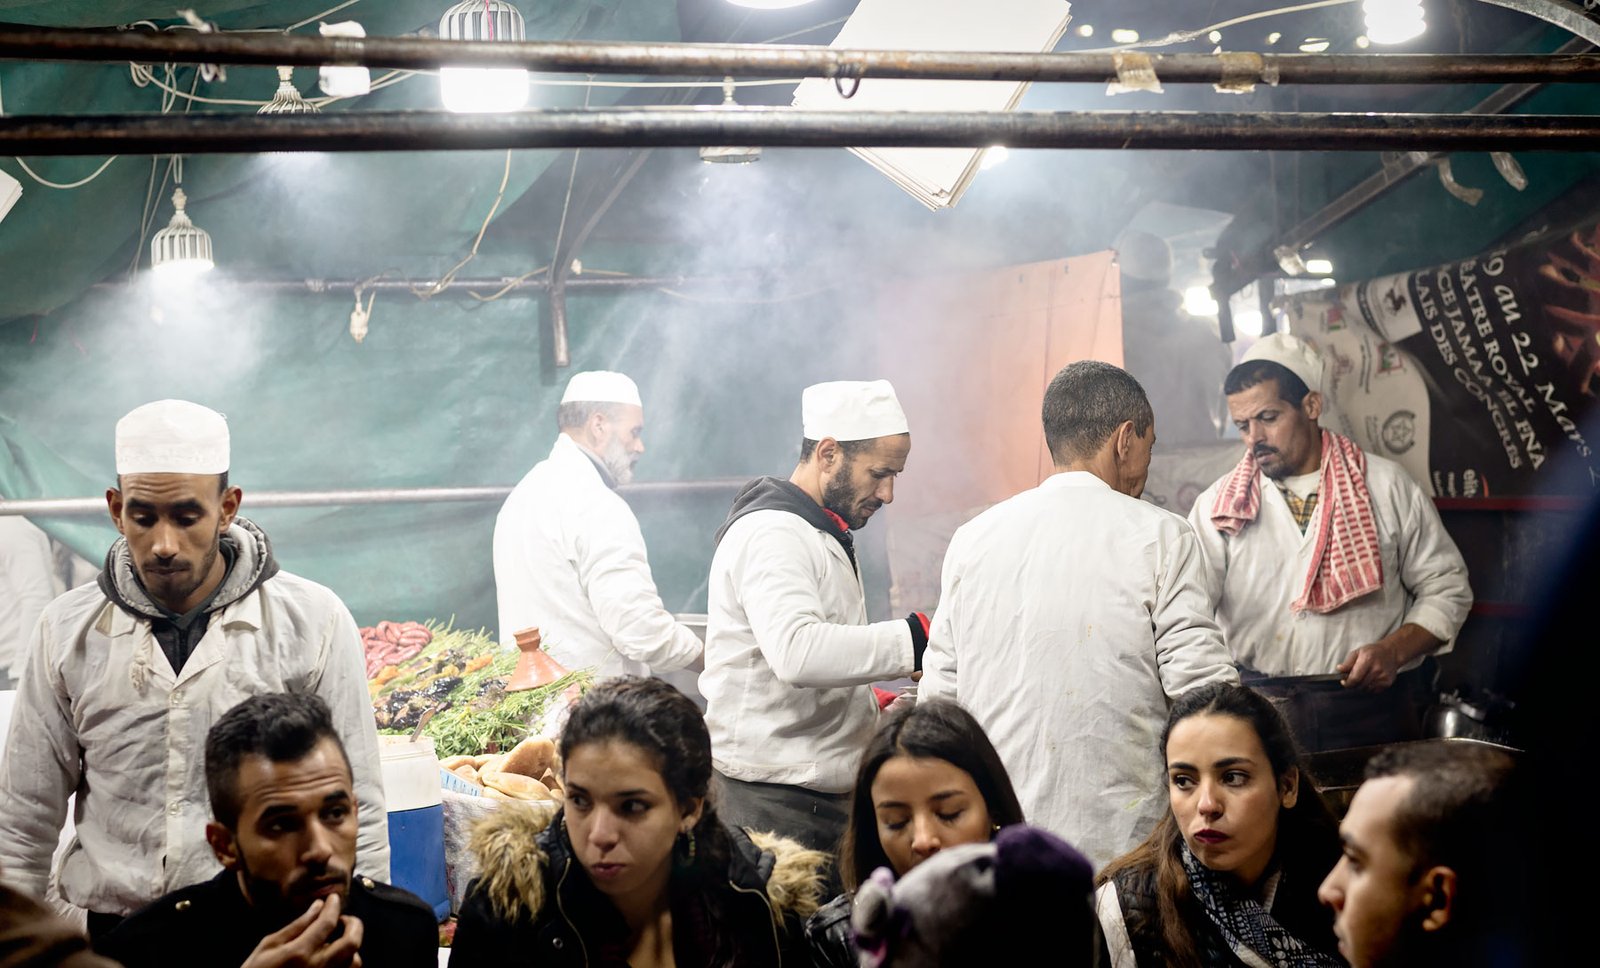 10 Amazing Things to Do in Marrakech (Marrakesh), Morocco - Food Stalls Night Market Djemaa El Fna